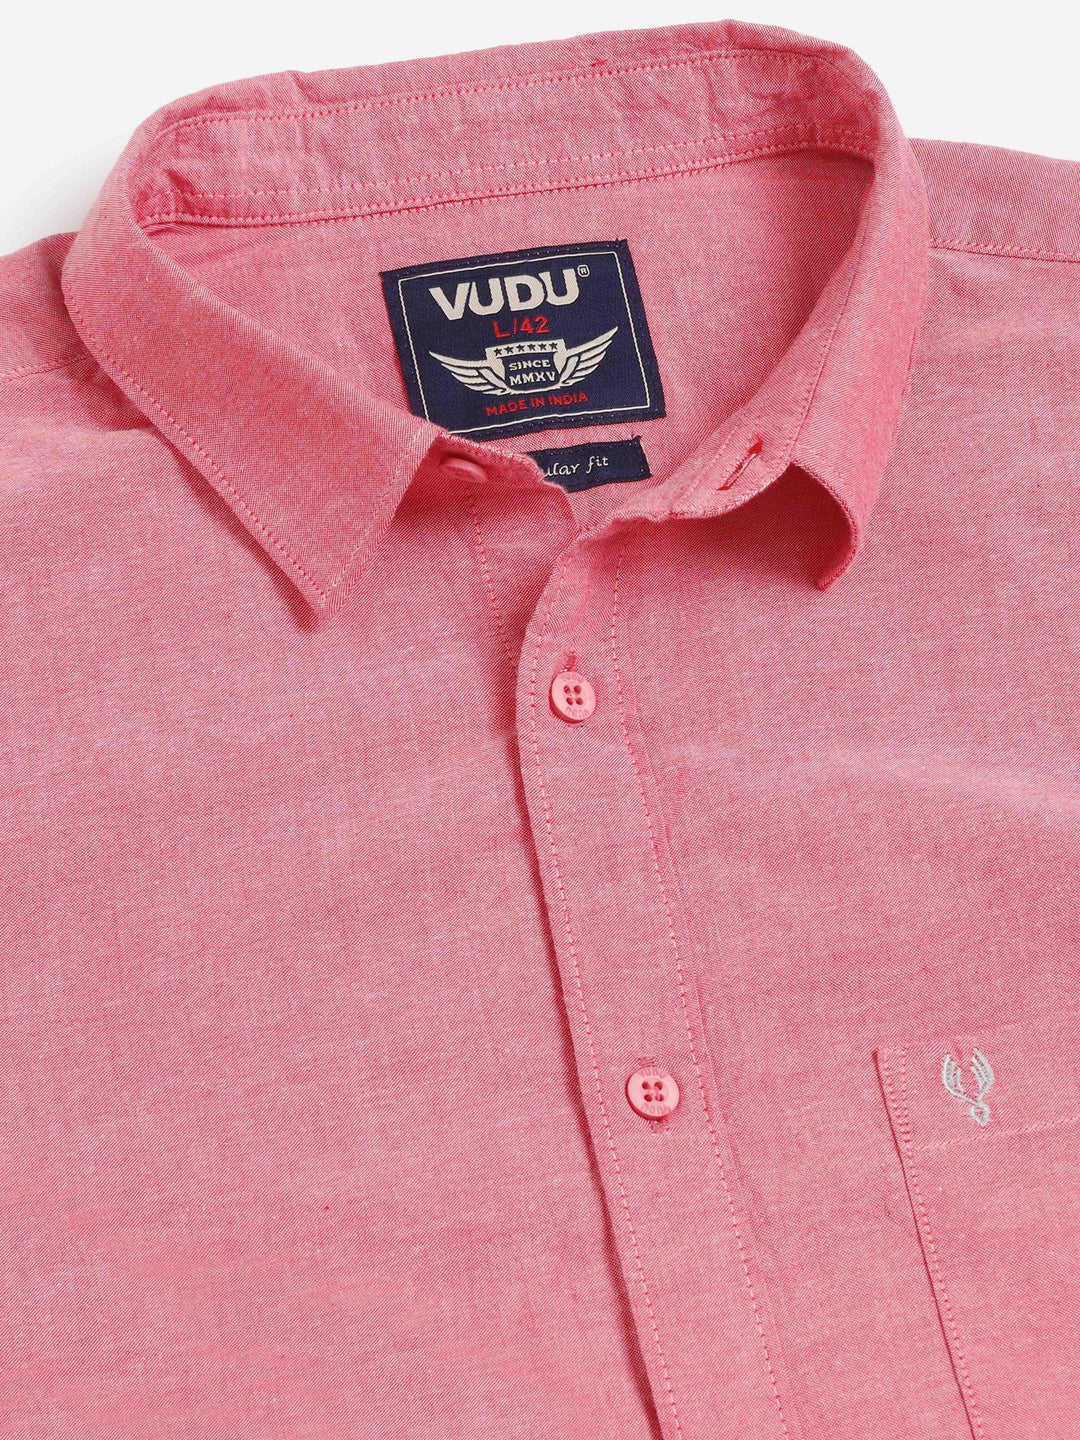 Classic Sunset Pink Shirt